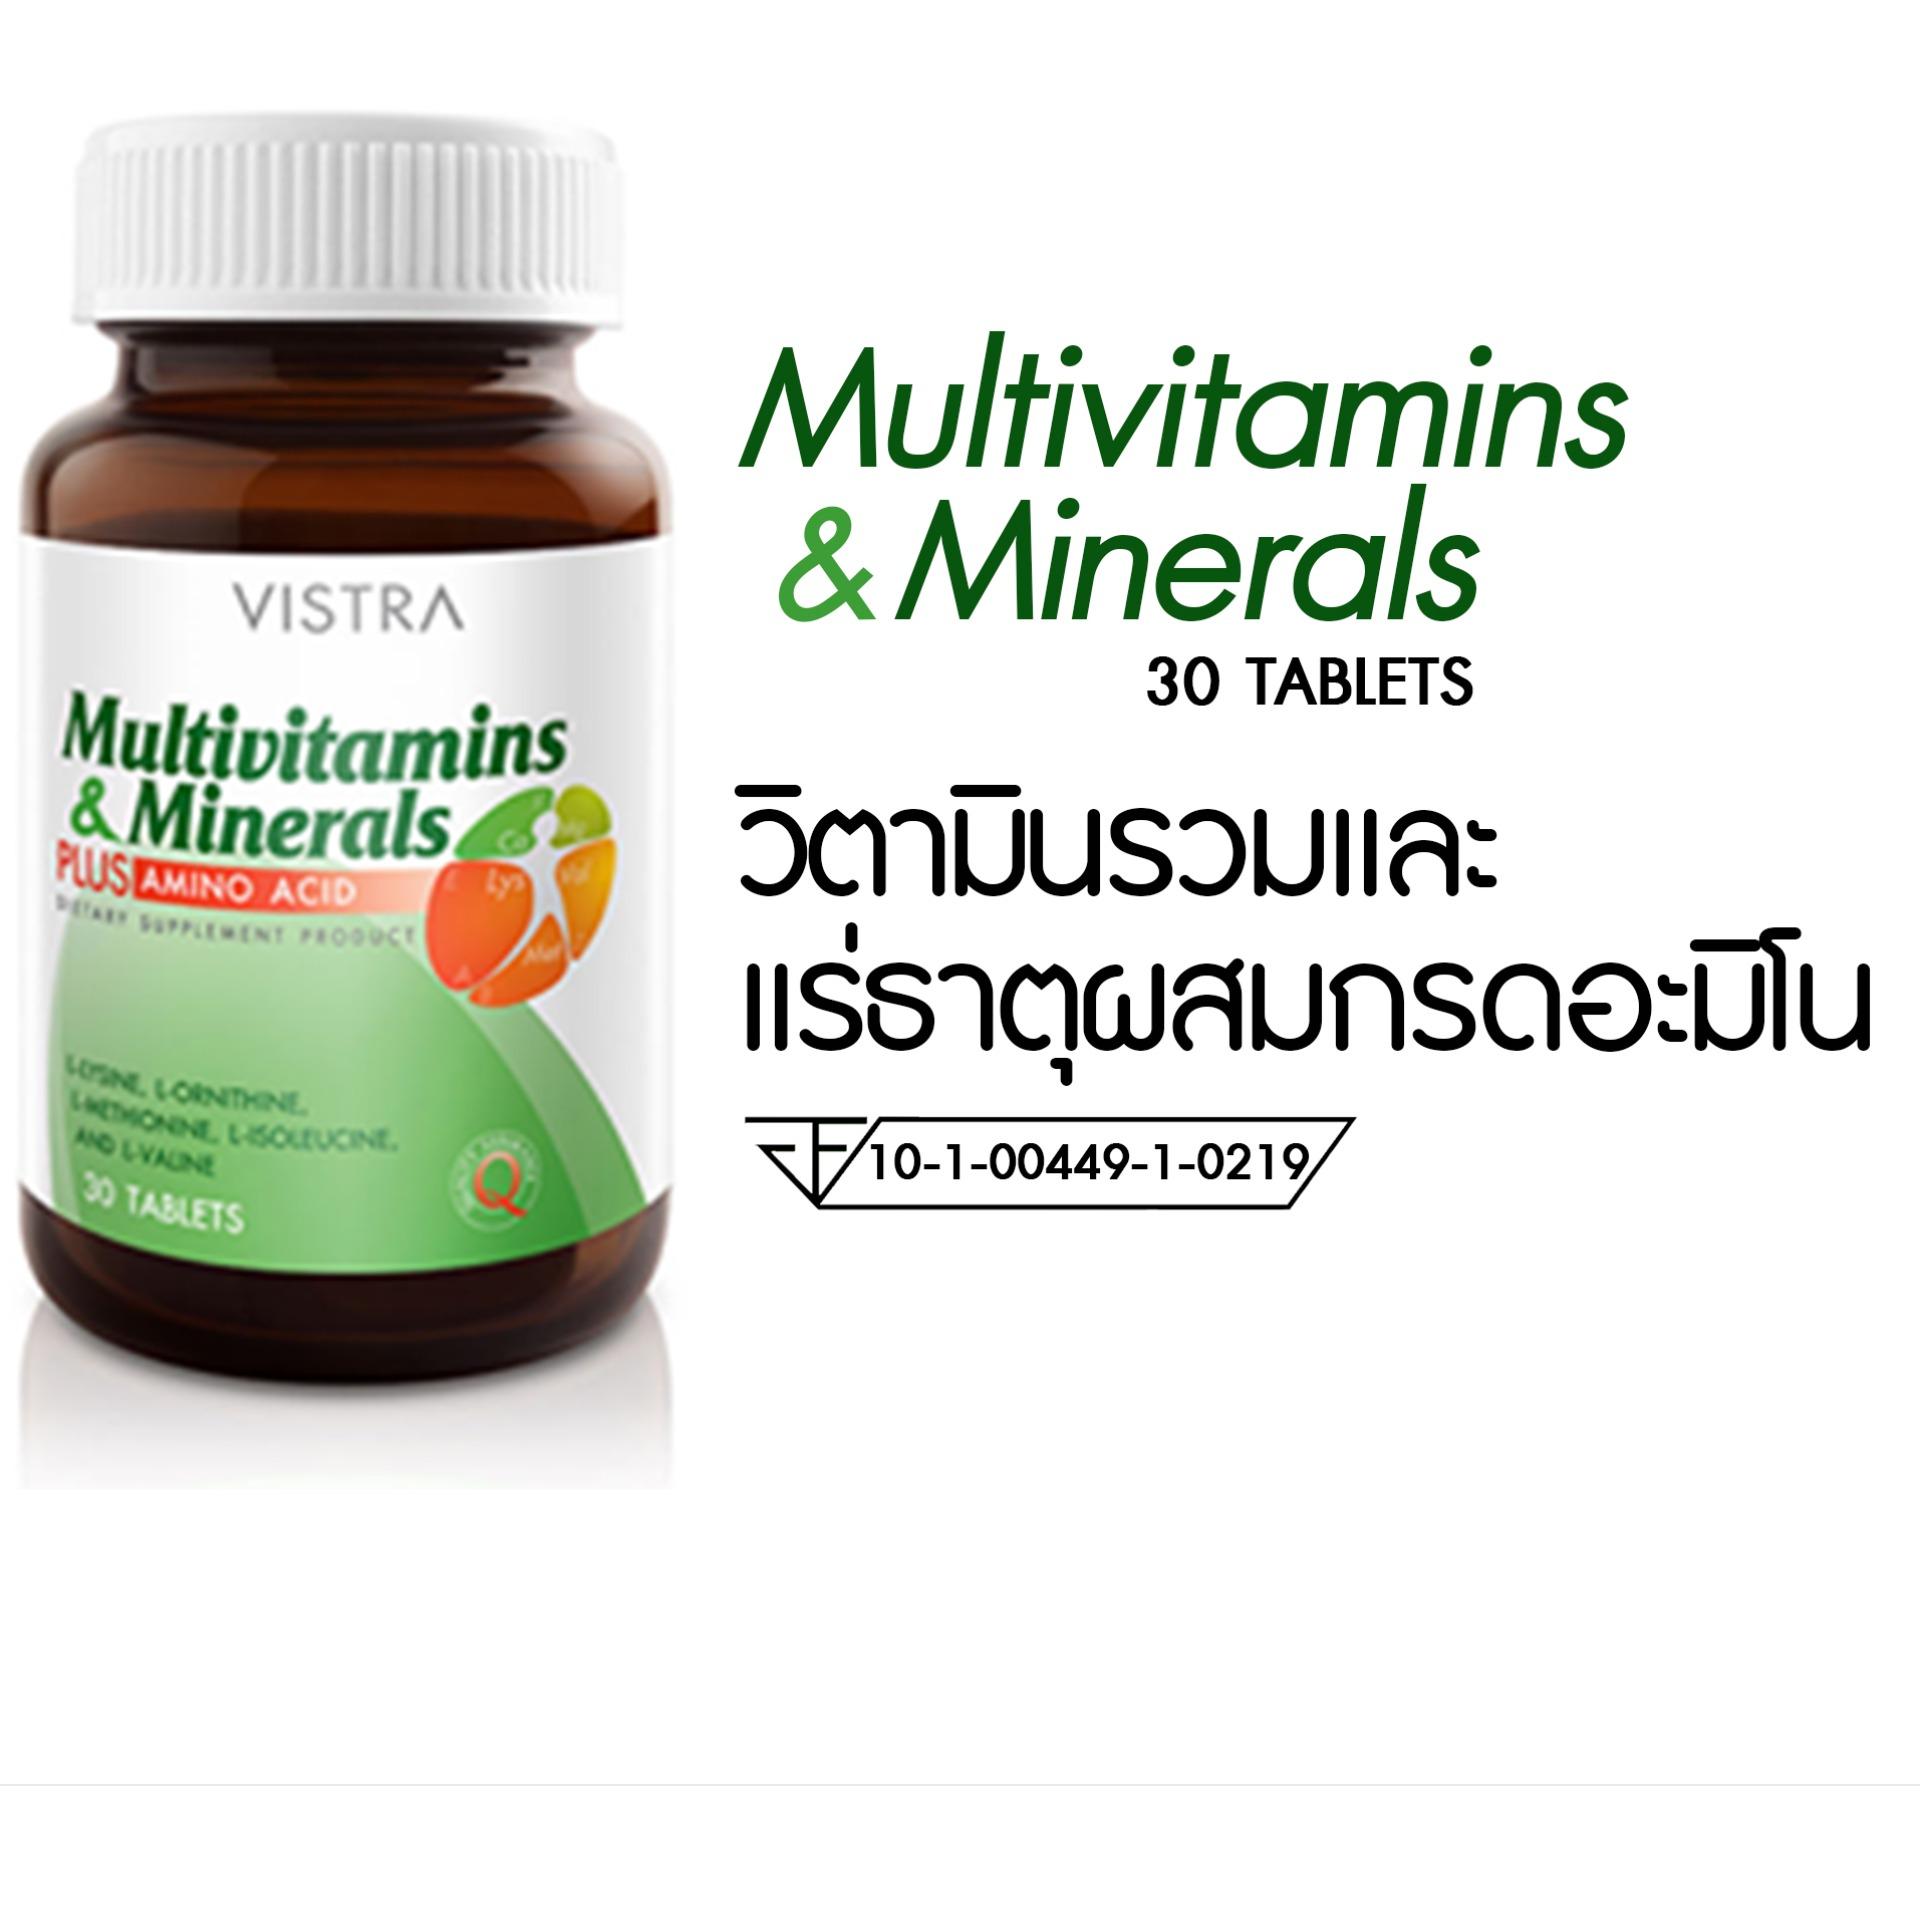 Vistra Multivitamins & Minerals Plus Amino acid วิตามินรวมและแร่ธาตุผสมกรดอะมิโน บำรุงร่างกาย ลดความอ่อนเพลีย 30เม็ด 1ขวด